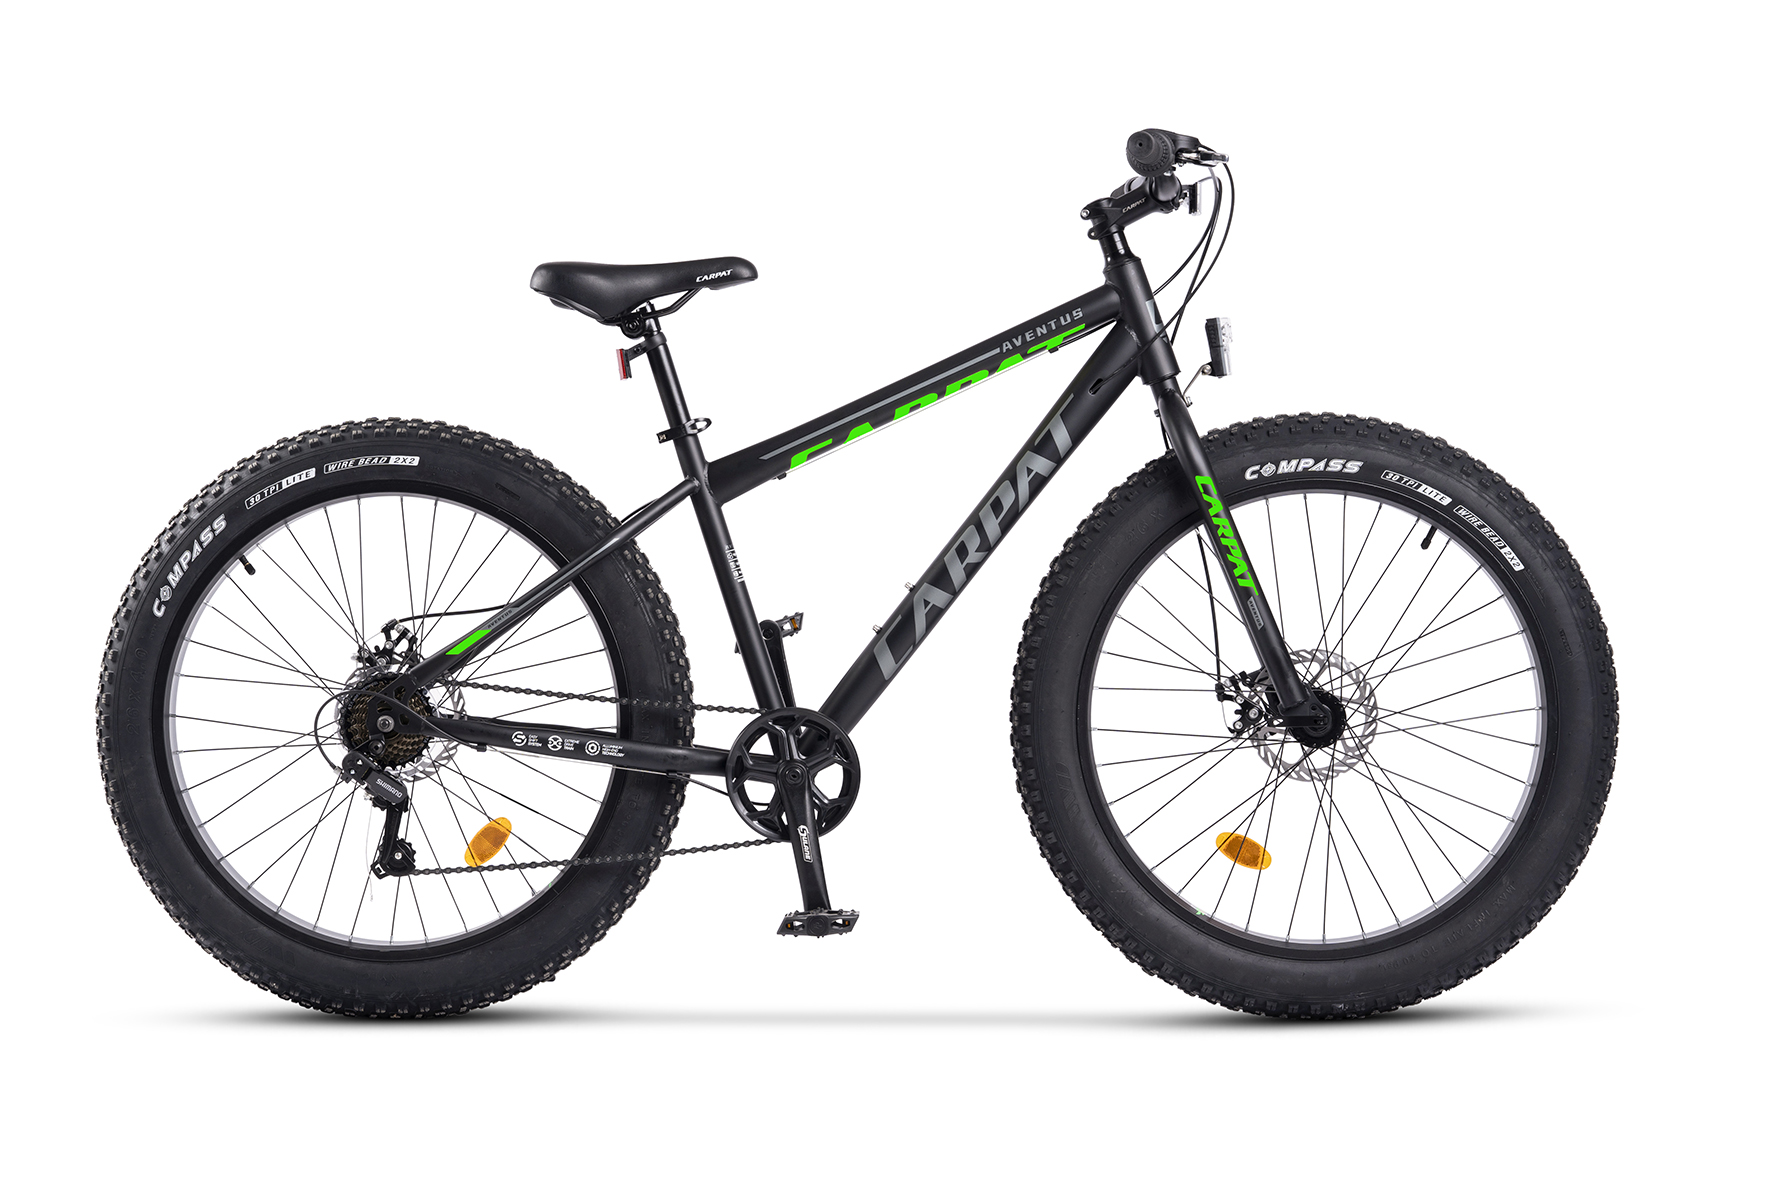 PROMO BICICLETE - Bicicleta Fat Bike Carpat Aventus C26217A 26", Negru/Gri/Verde, https:carpatsport.ro